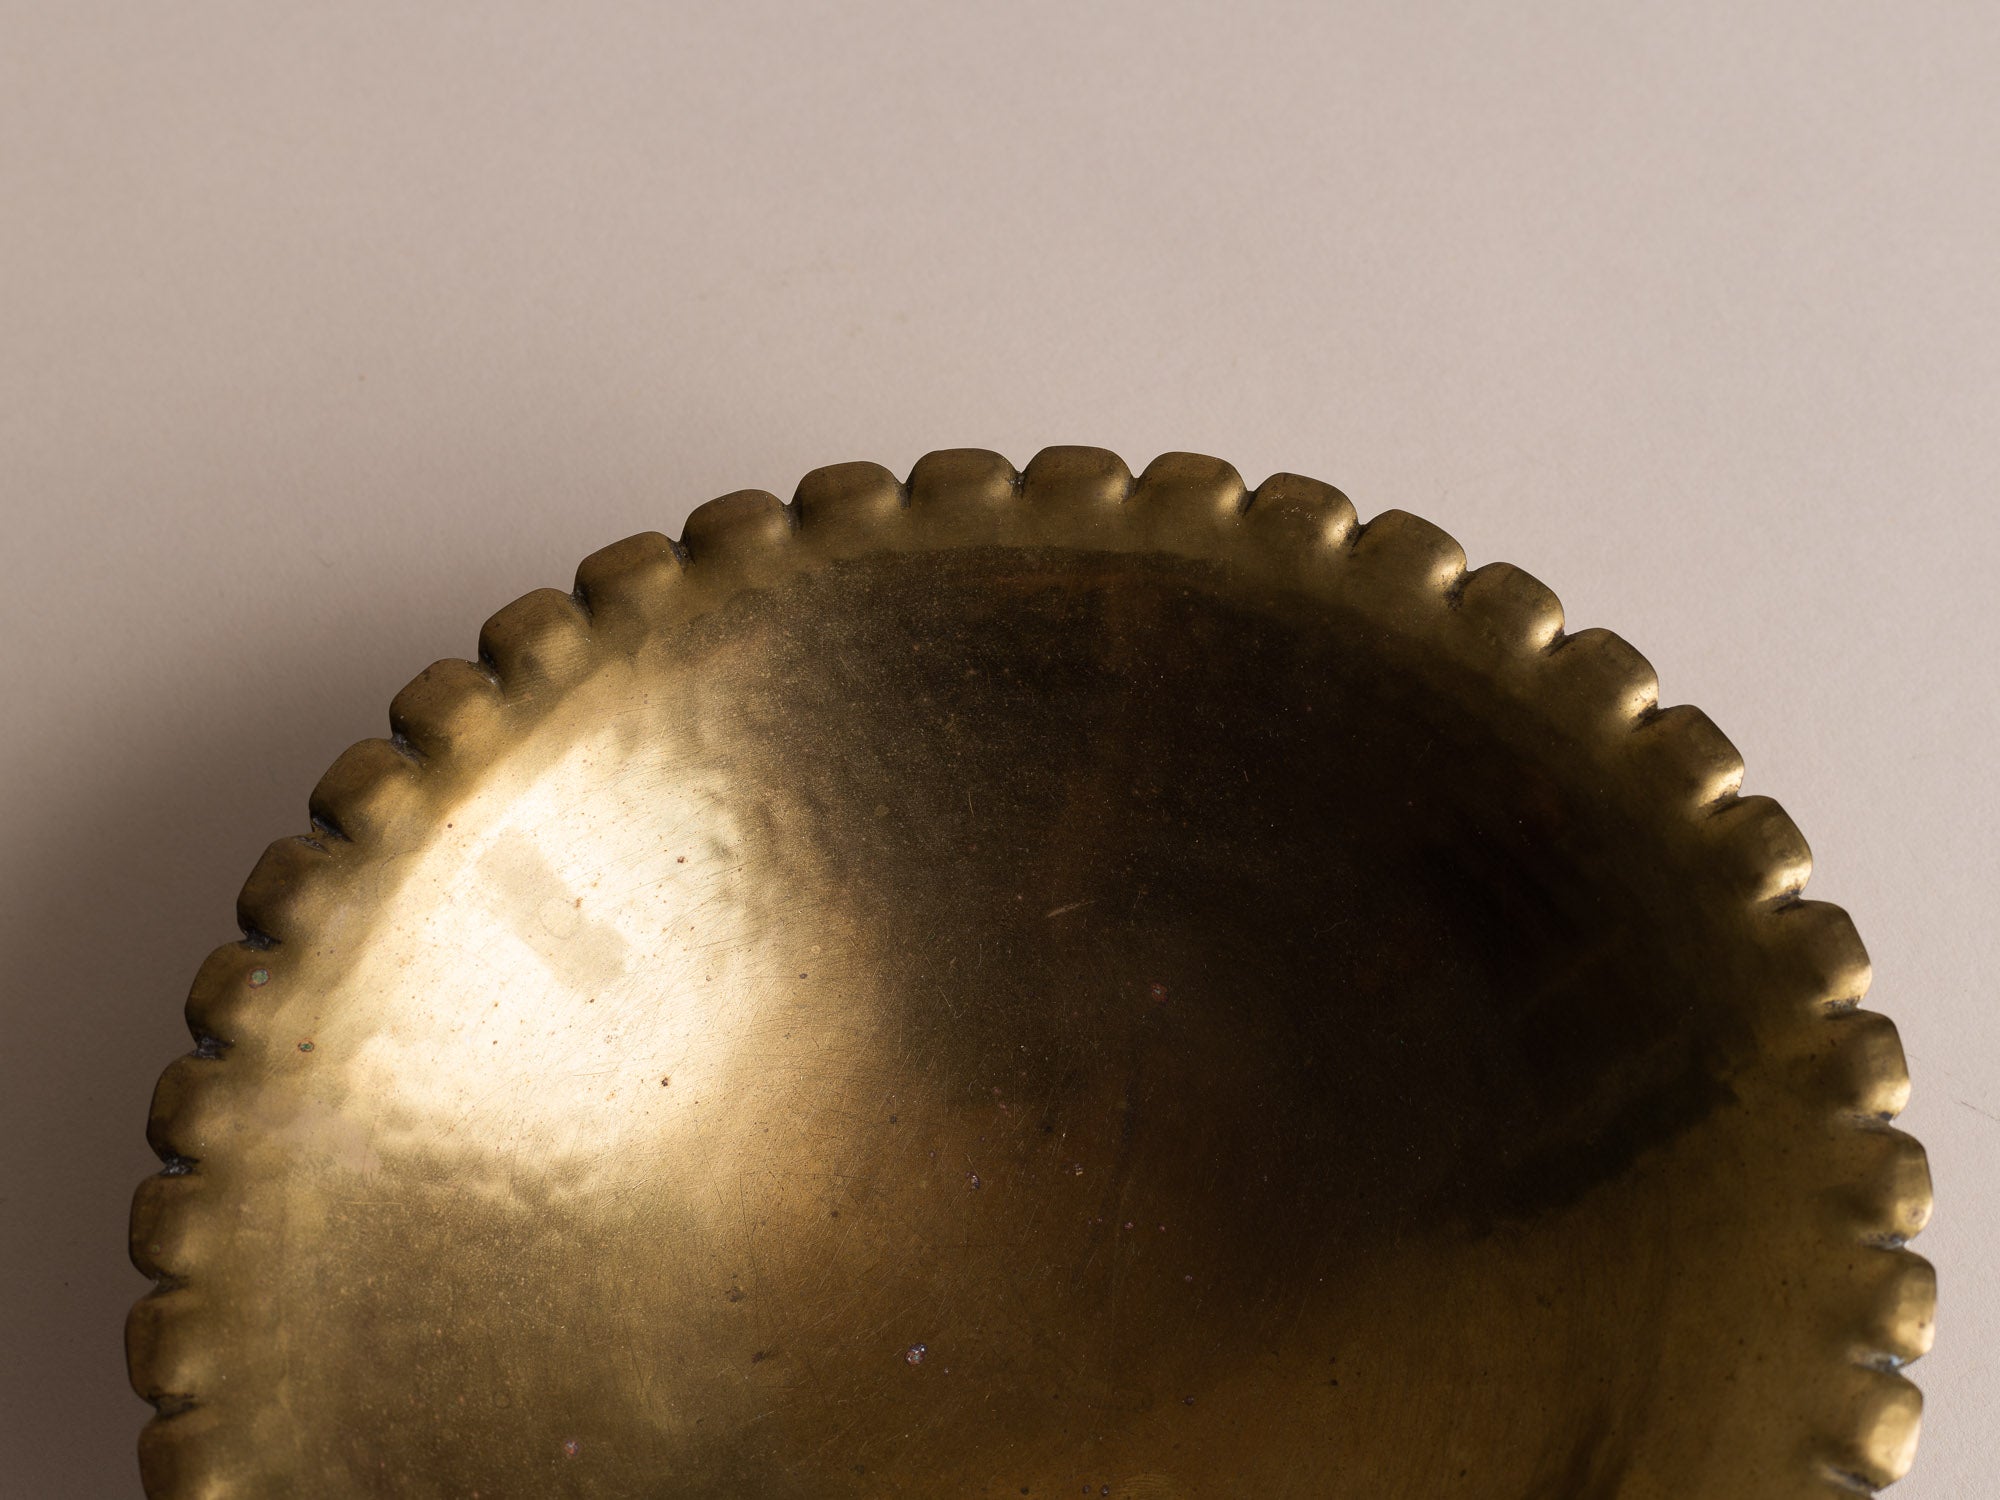 Coupe en laiton par Alois Wörle & Neues Münchner Kunstgewerbe, Allemagne (vers 1920)..Brass bowl by Alois Wörle & Neues Münchner Kunstgewerbe, Germany (circa 1920)